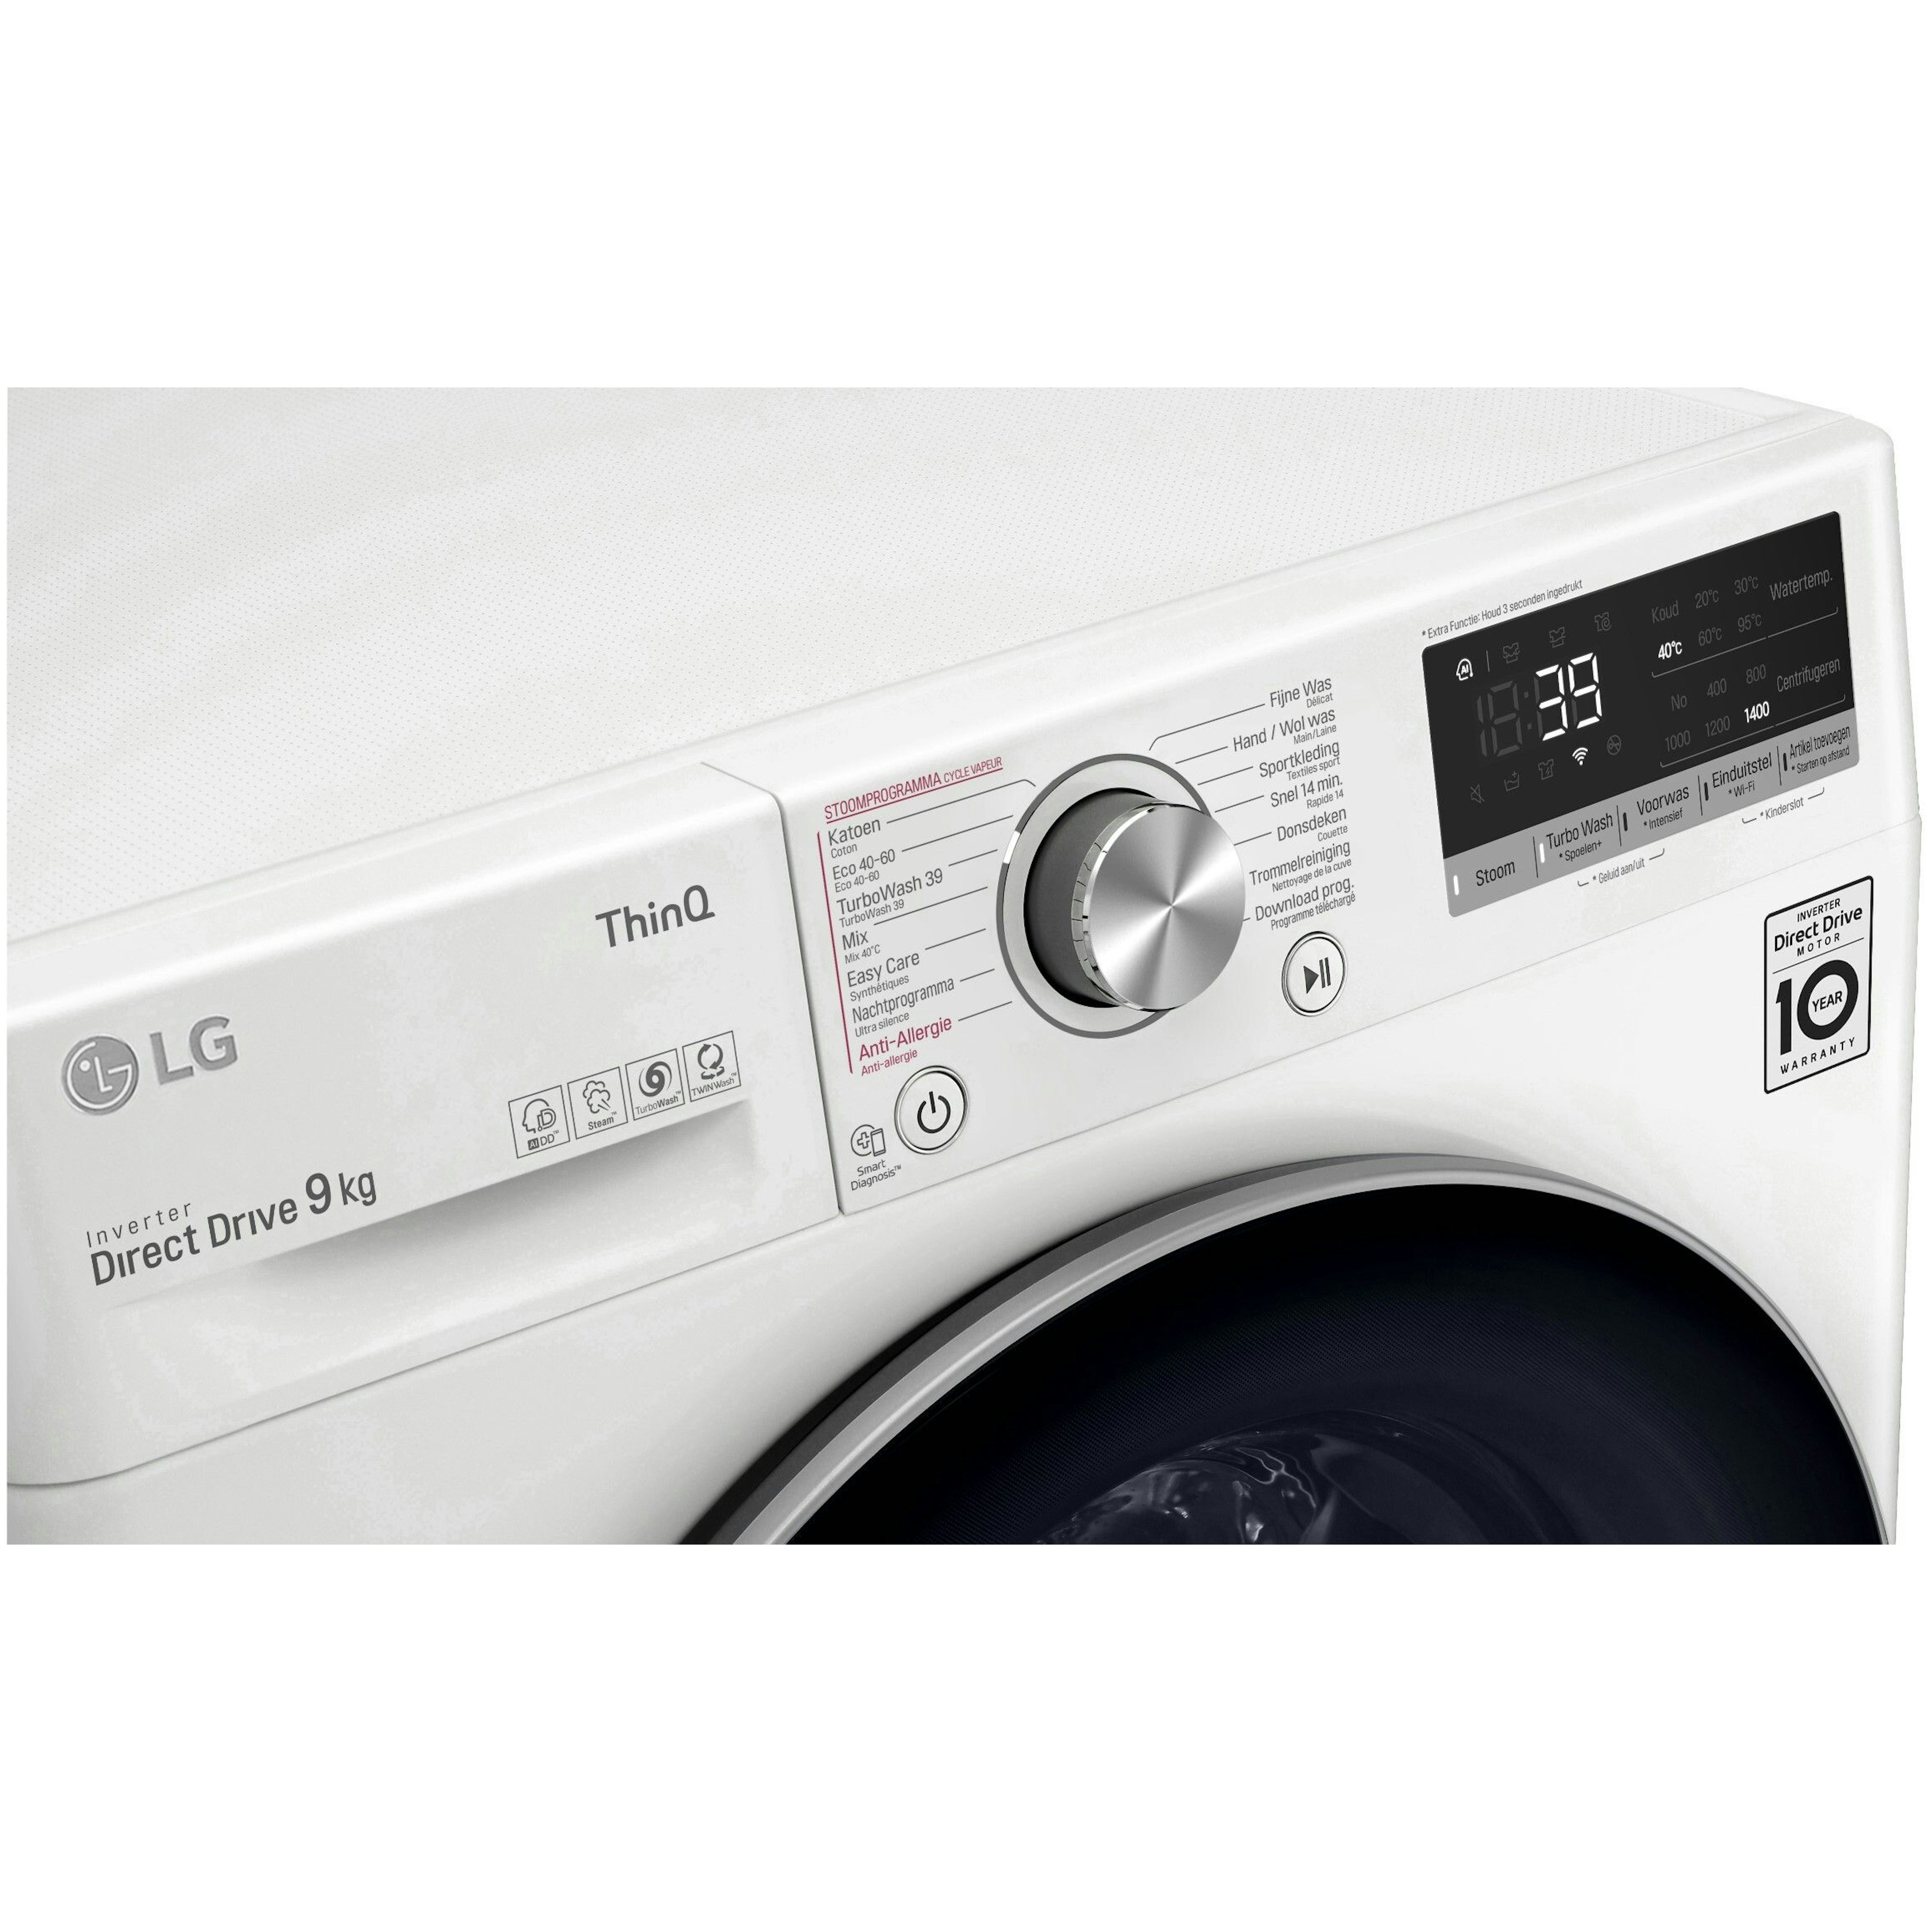 LG wasmachine GC3V709S1 afbeelding 3